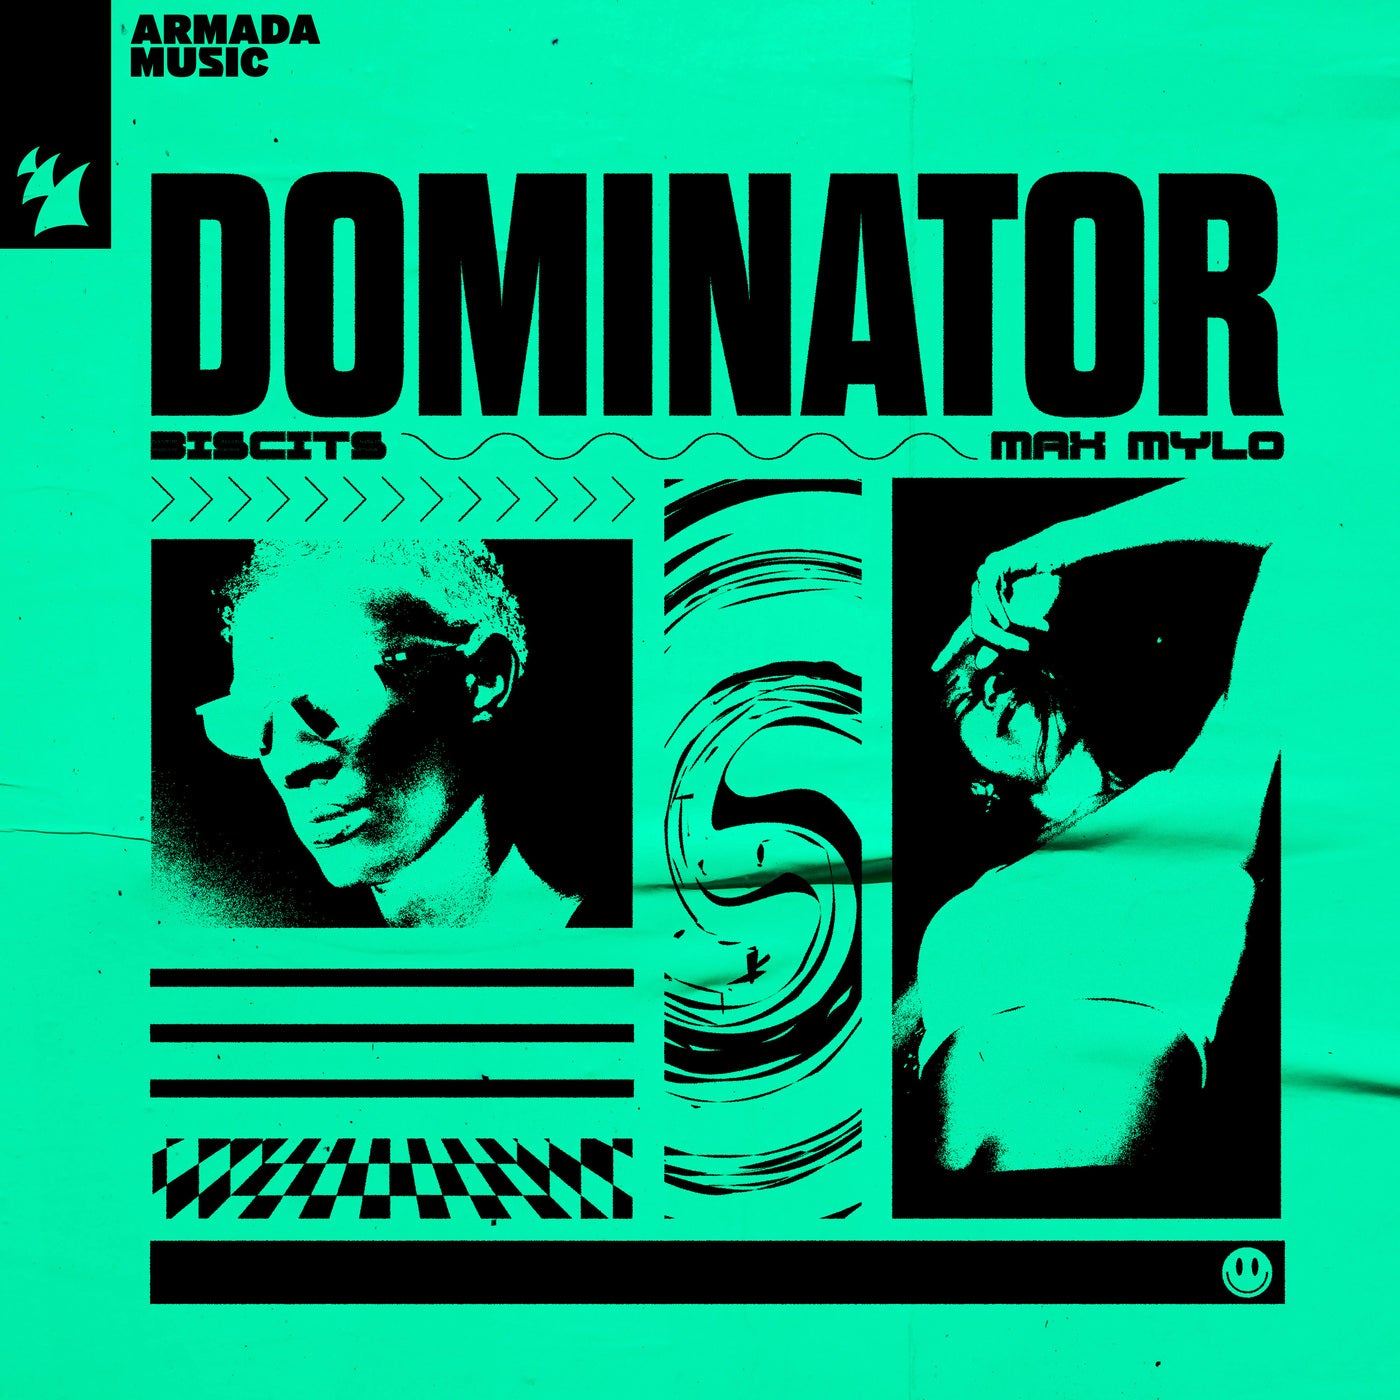 image cover: Biscits, Max Mylo - Dominator on Armada Music